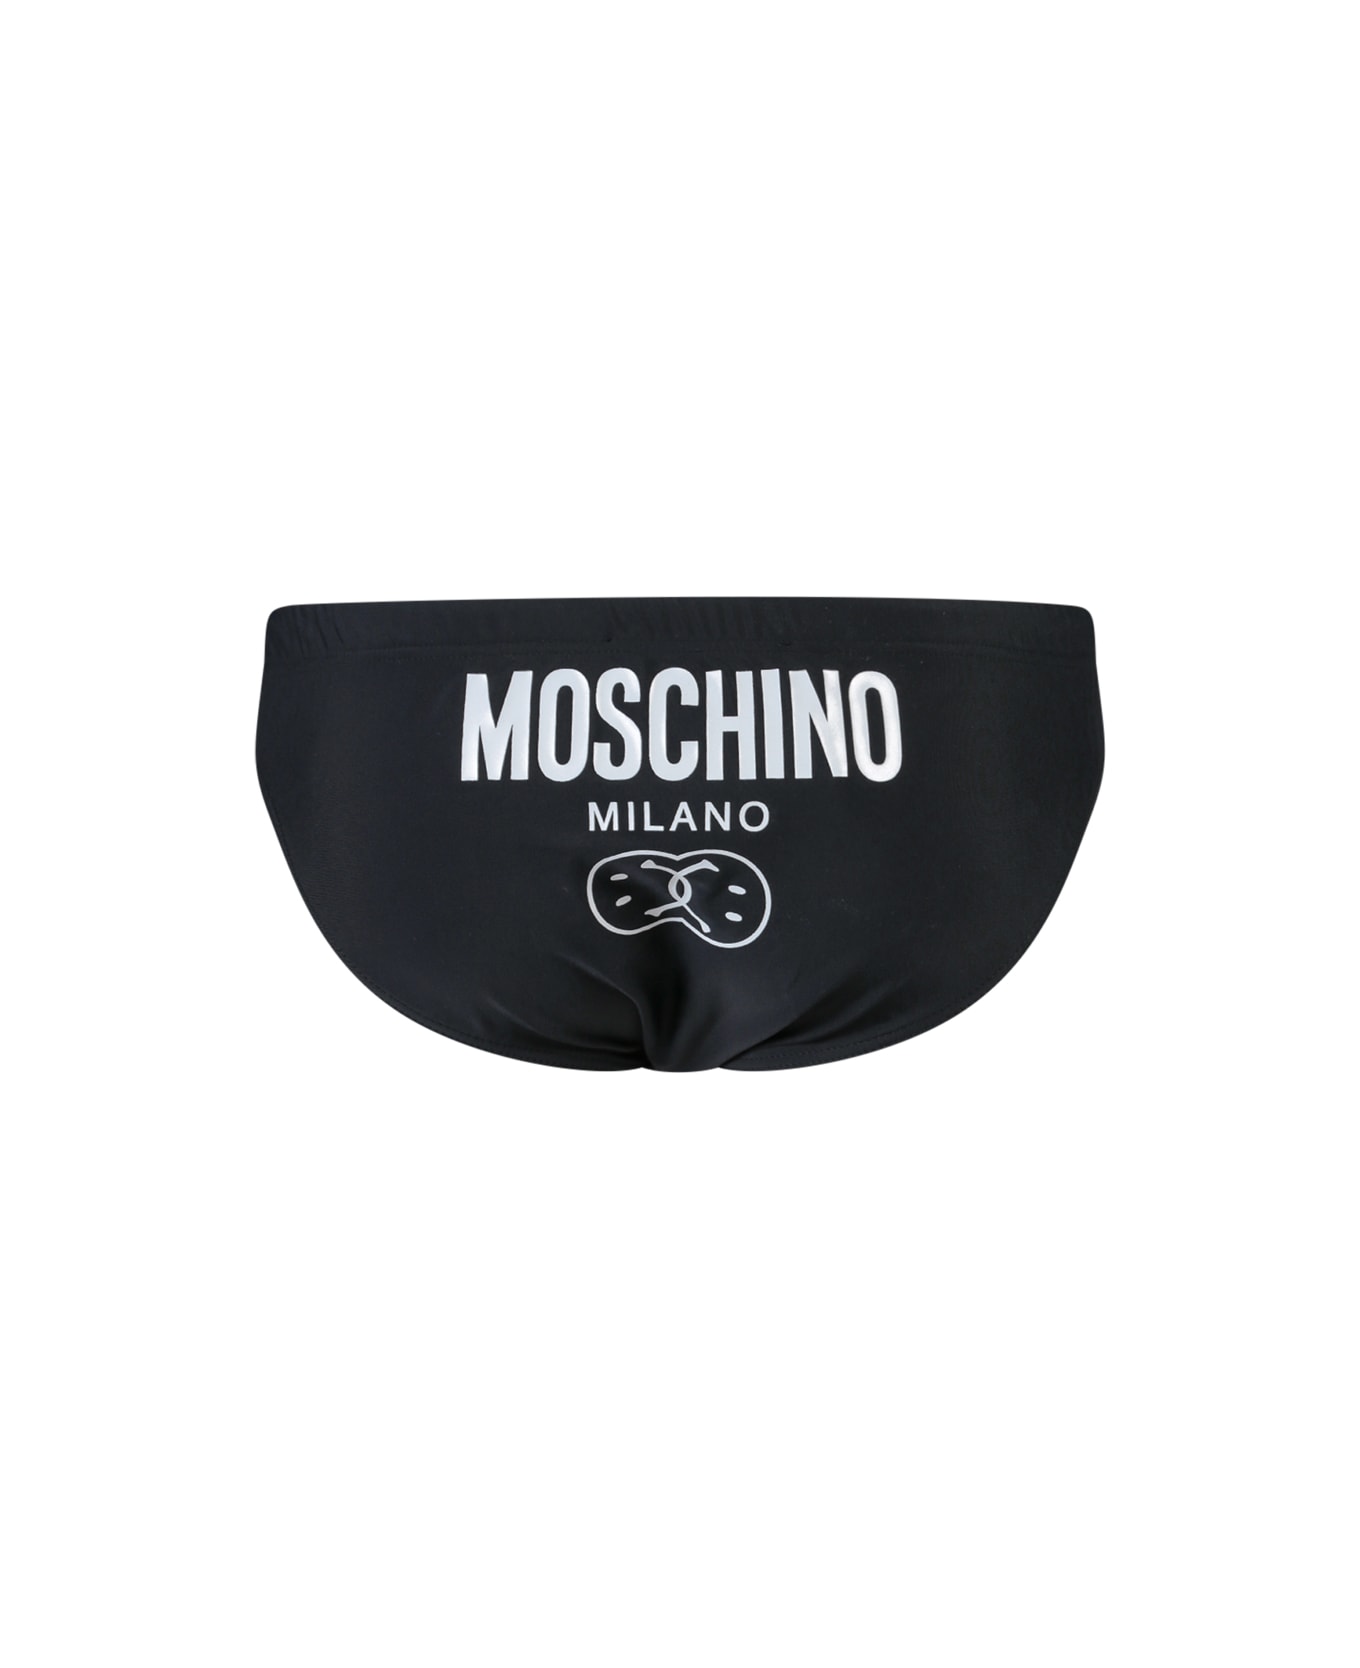 Moschino Black Stretch Nylon Swimming Brief - Black